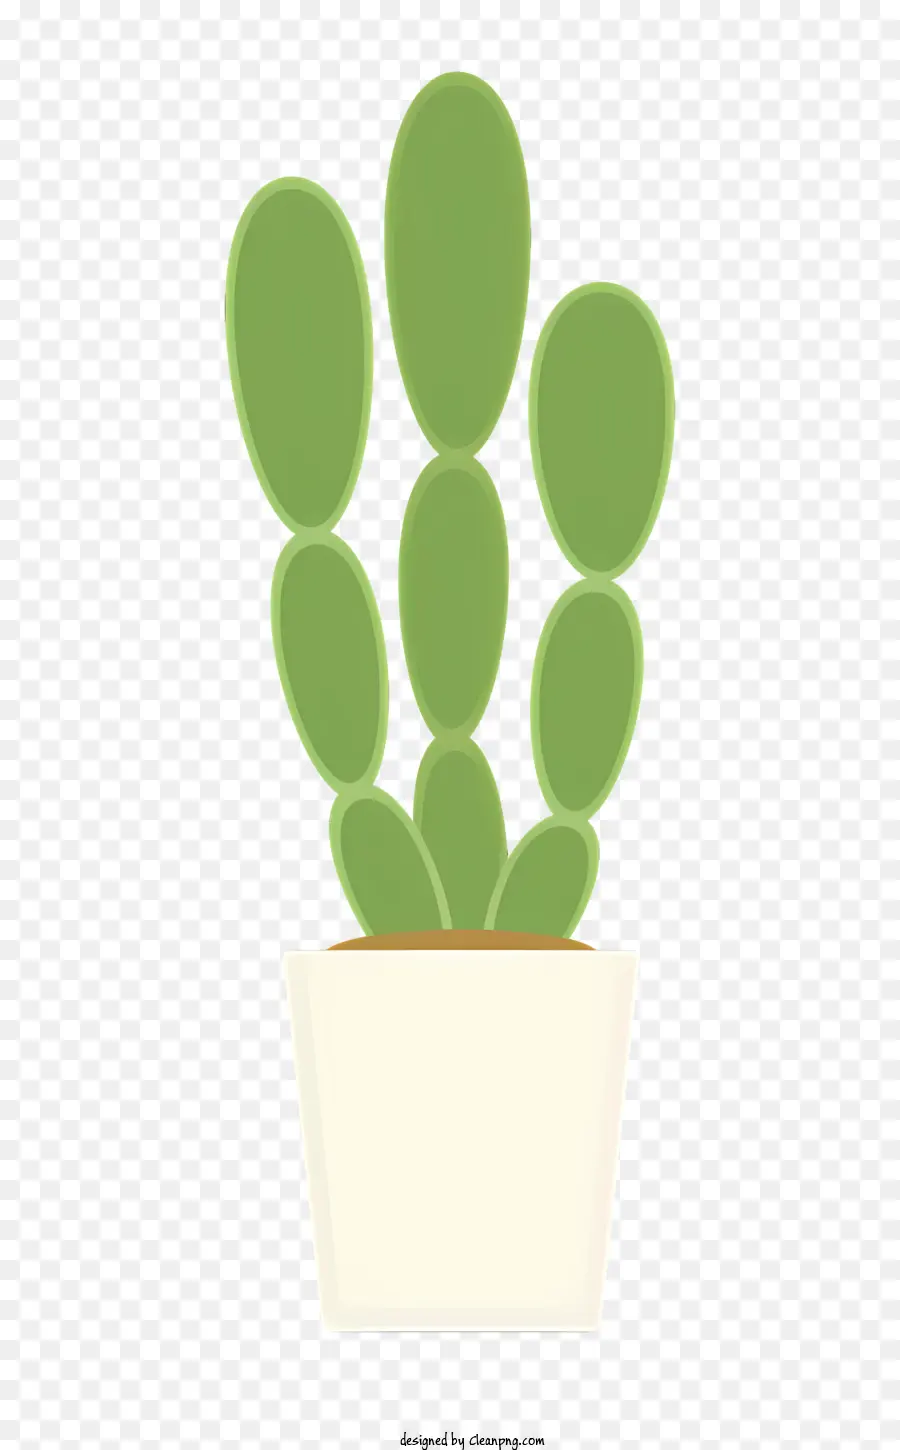 Icona in vaso di cactus pianta in ceramica bianca foglie verdi rotonde piccole punte marroni - Cactus in vaso con foglie verdi e picchi